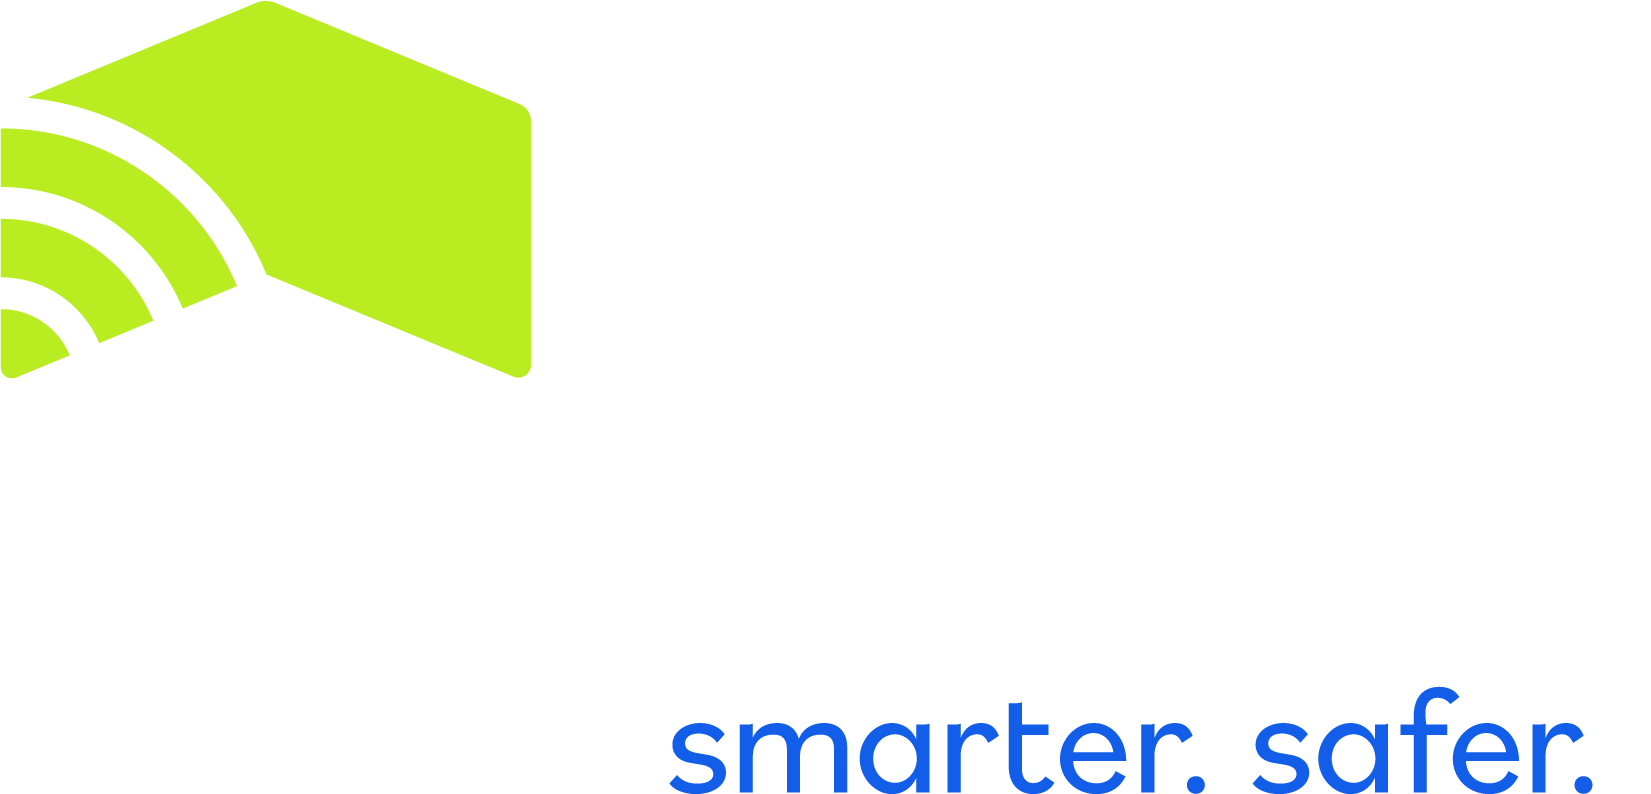 Smarter Homes Australia logo